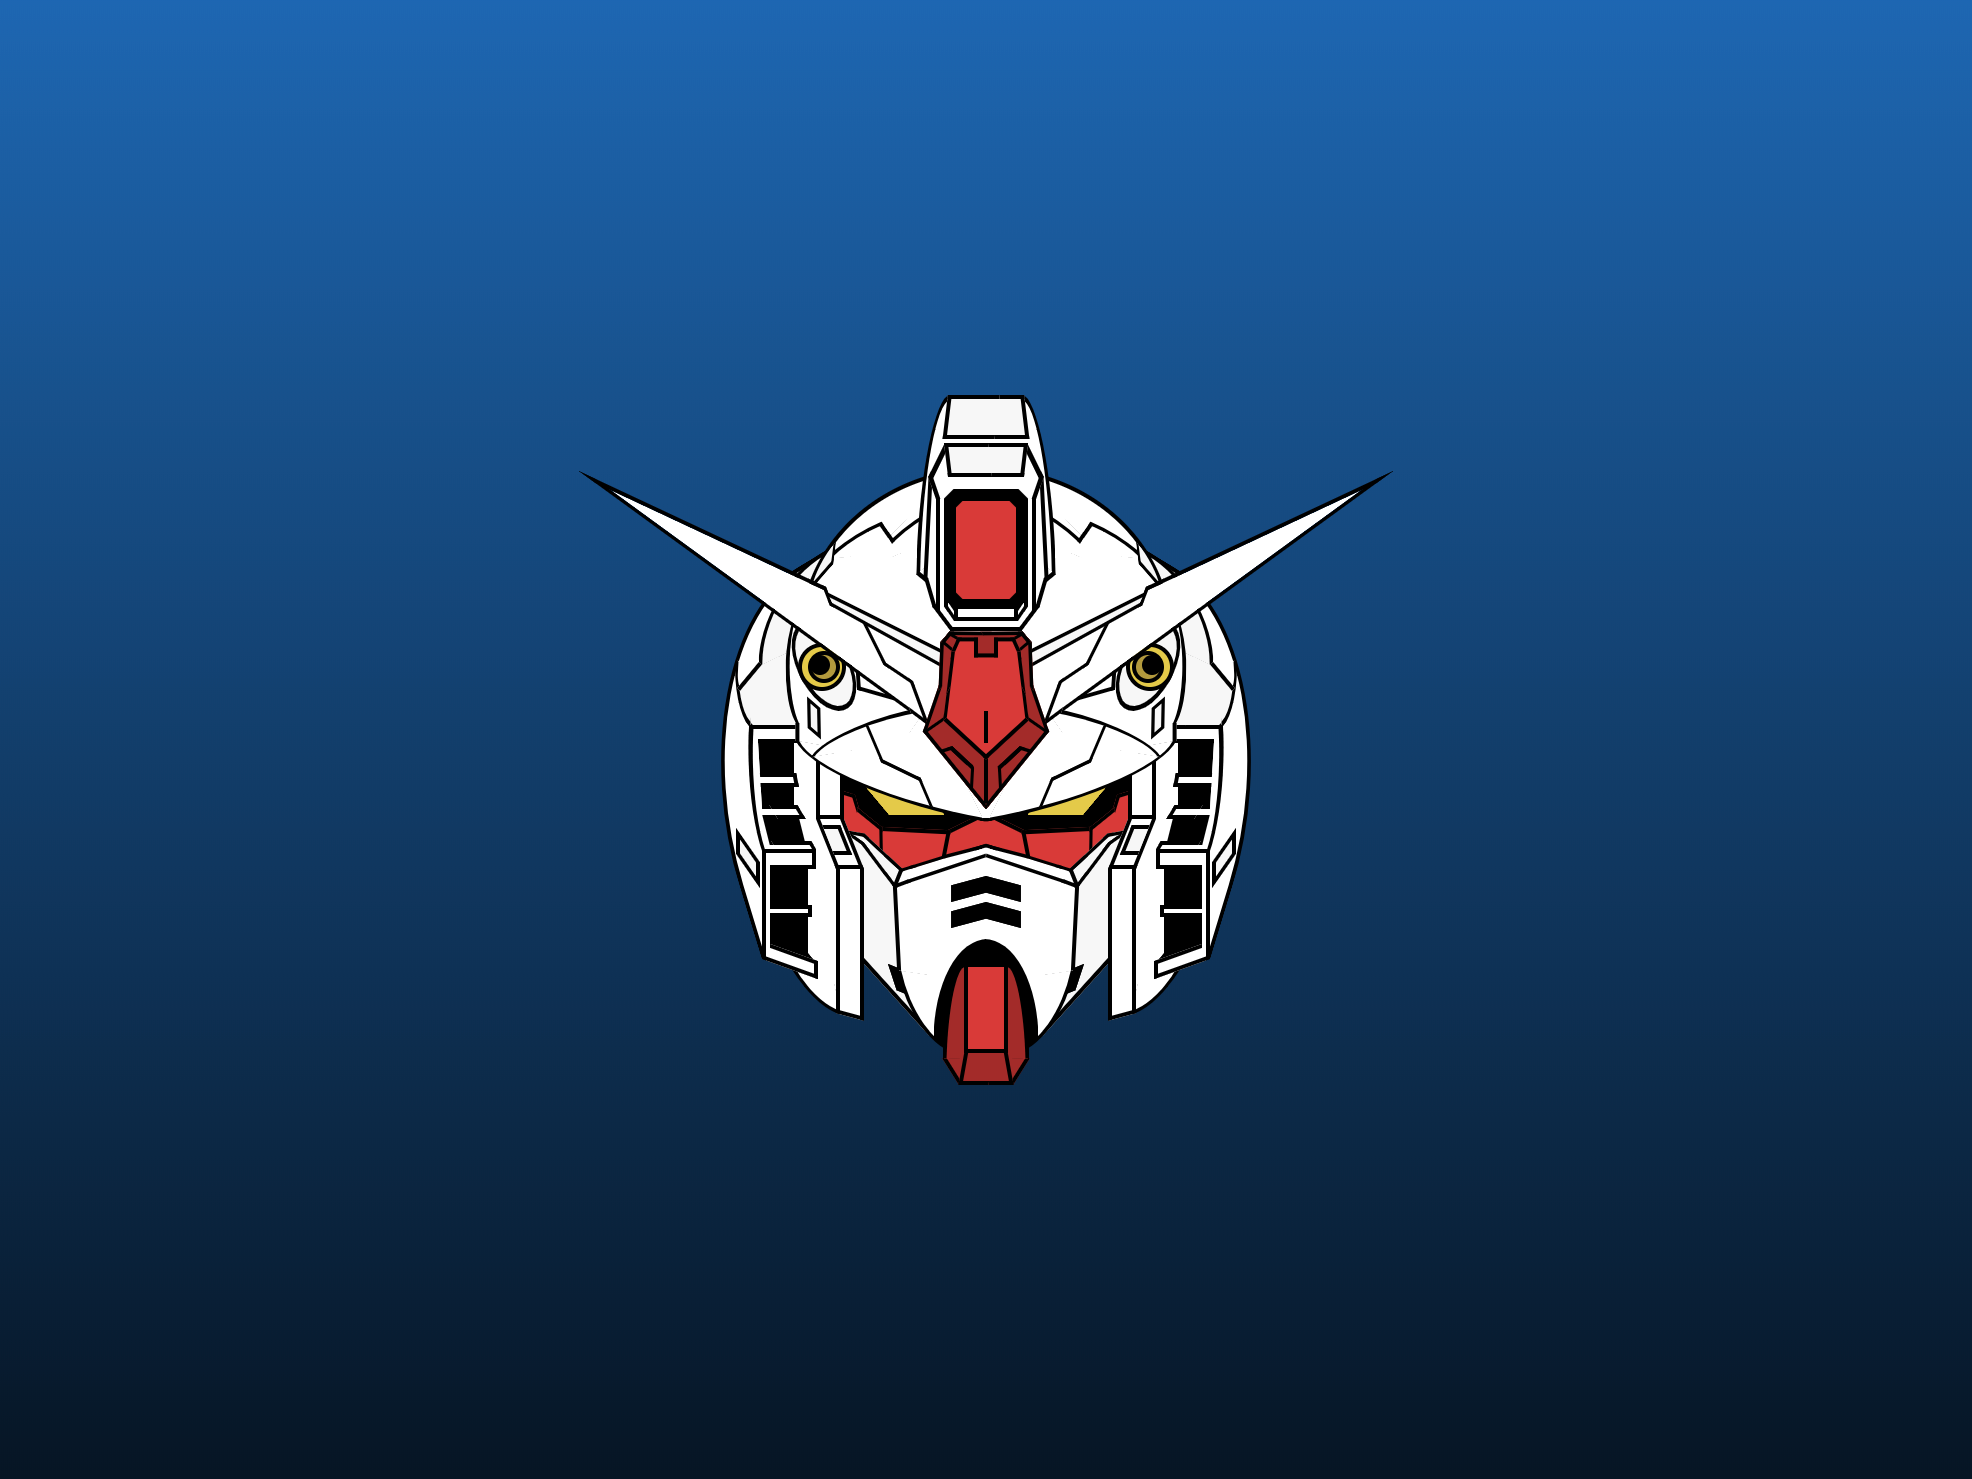 Screenshot of RX-78-2 Gundam's Head drawn using CSS3